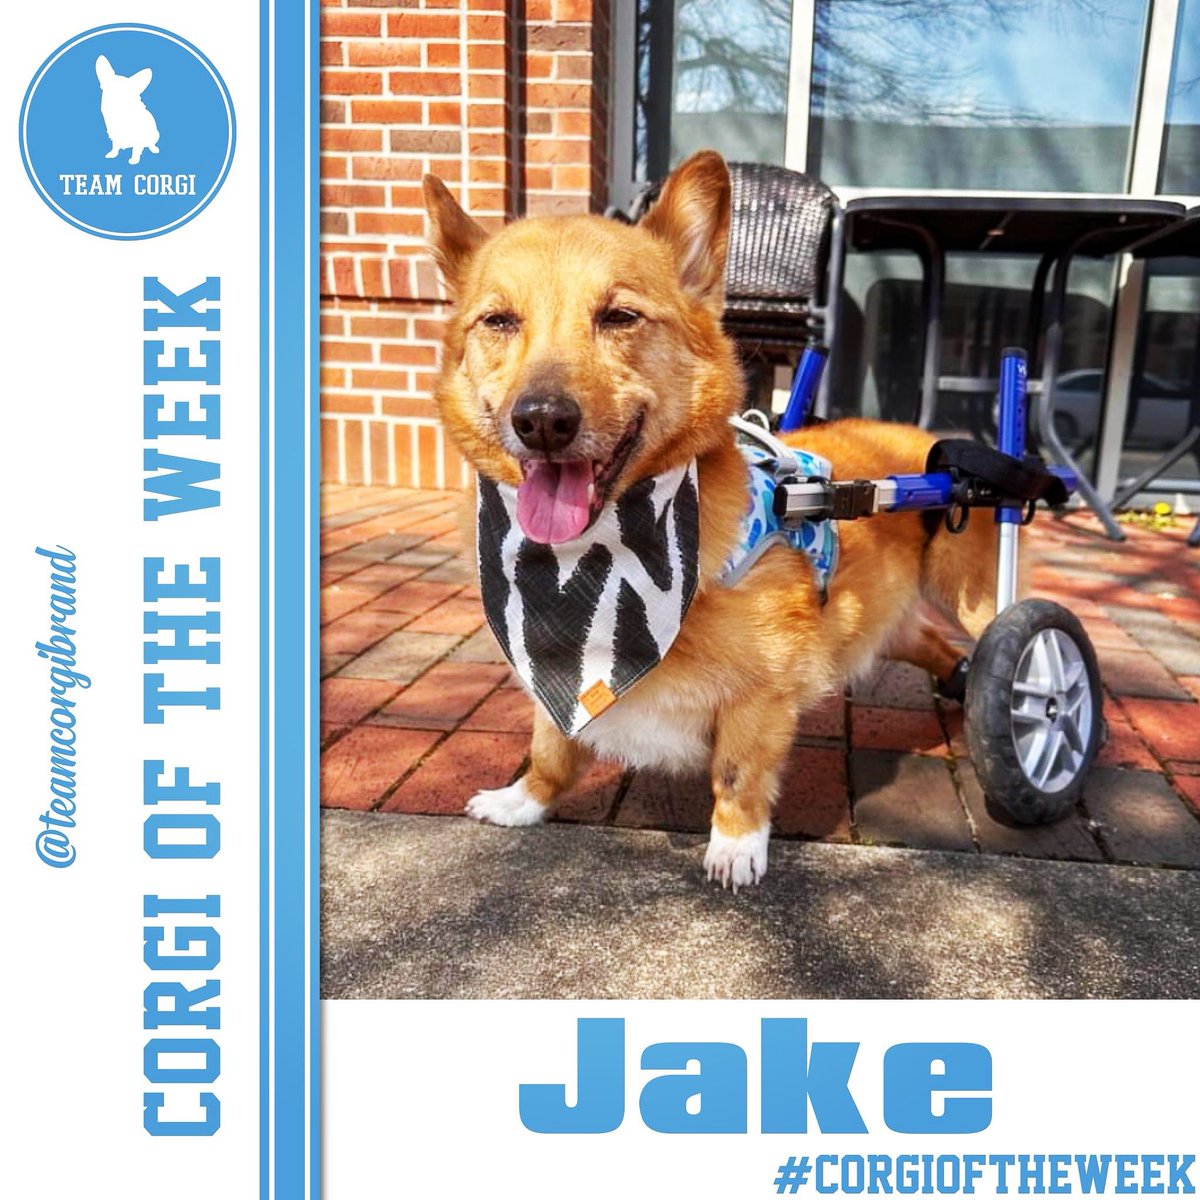 This week’s #CorgioftheWeek is Jake!

teamcorgibrand.com/pages/corgi-of…

#TeamCorgi #CorgiCrew